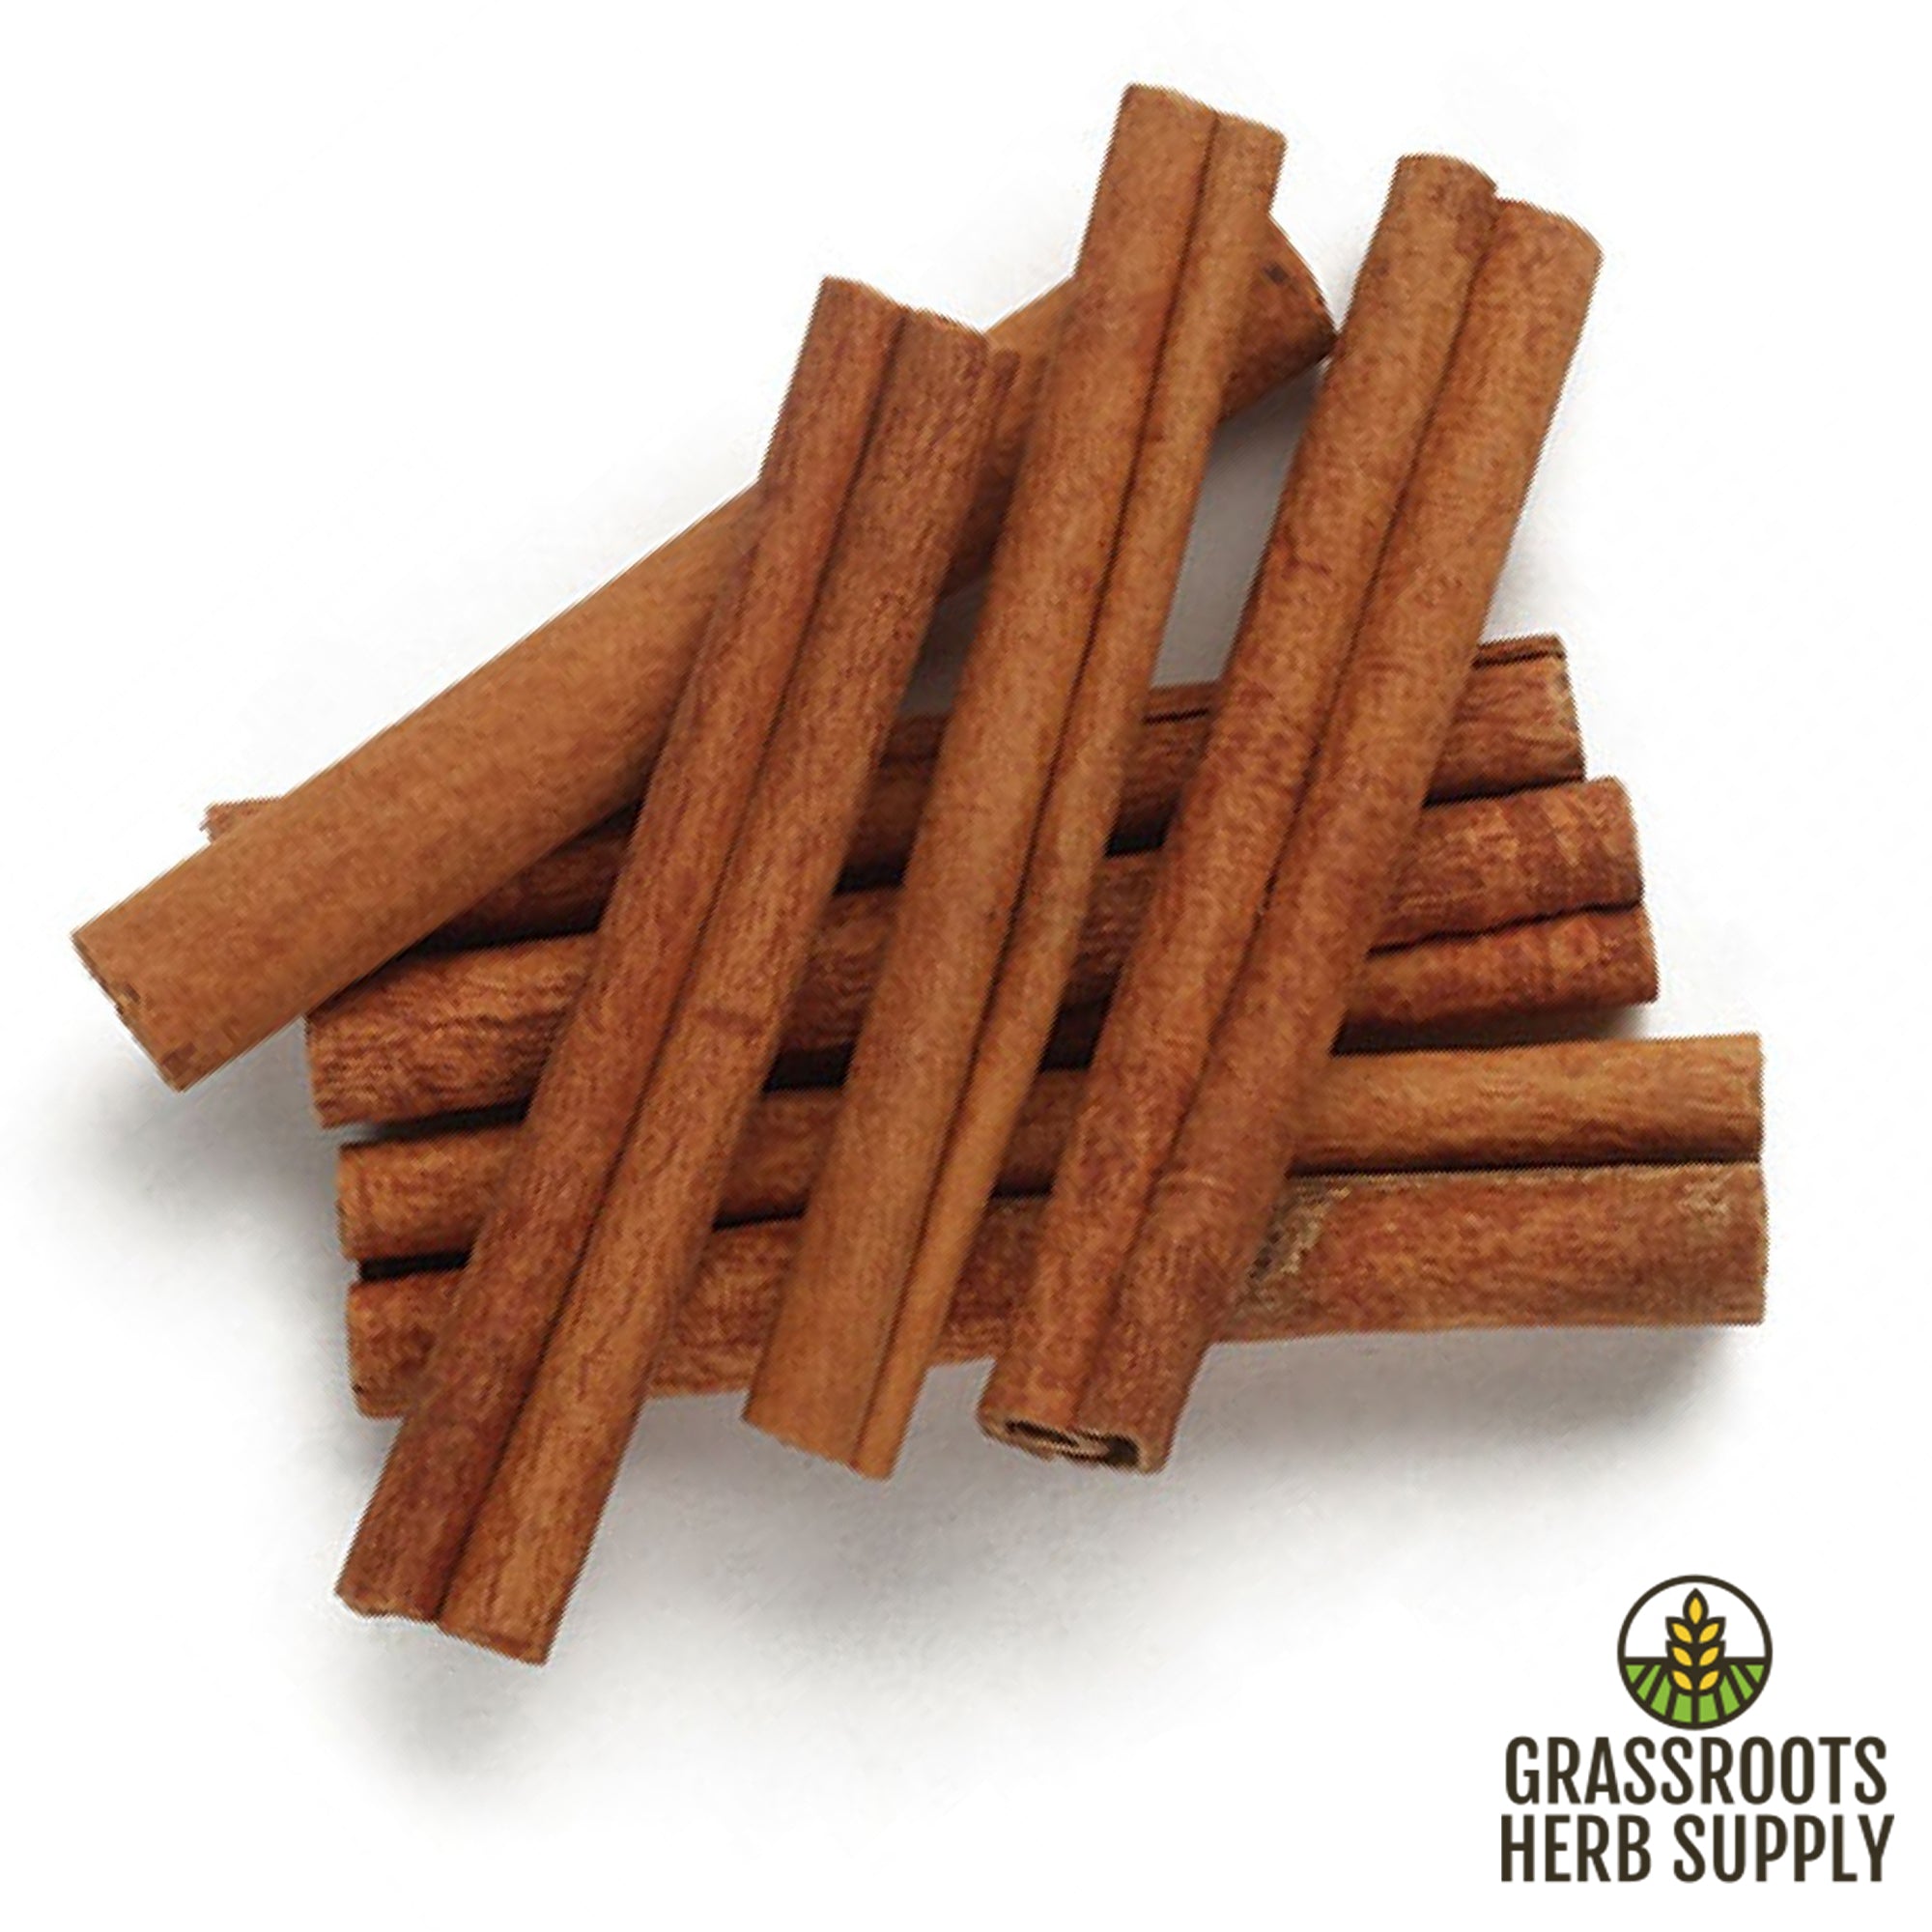 Korintje Cinnamon Sticks, 2.75" (Cinnamomum burmannii)